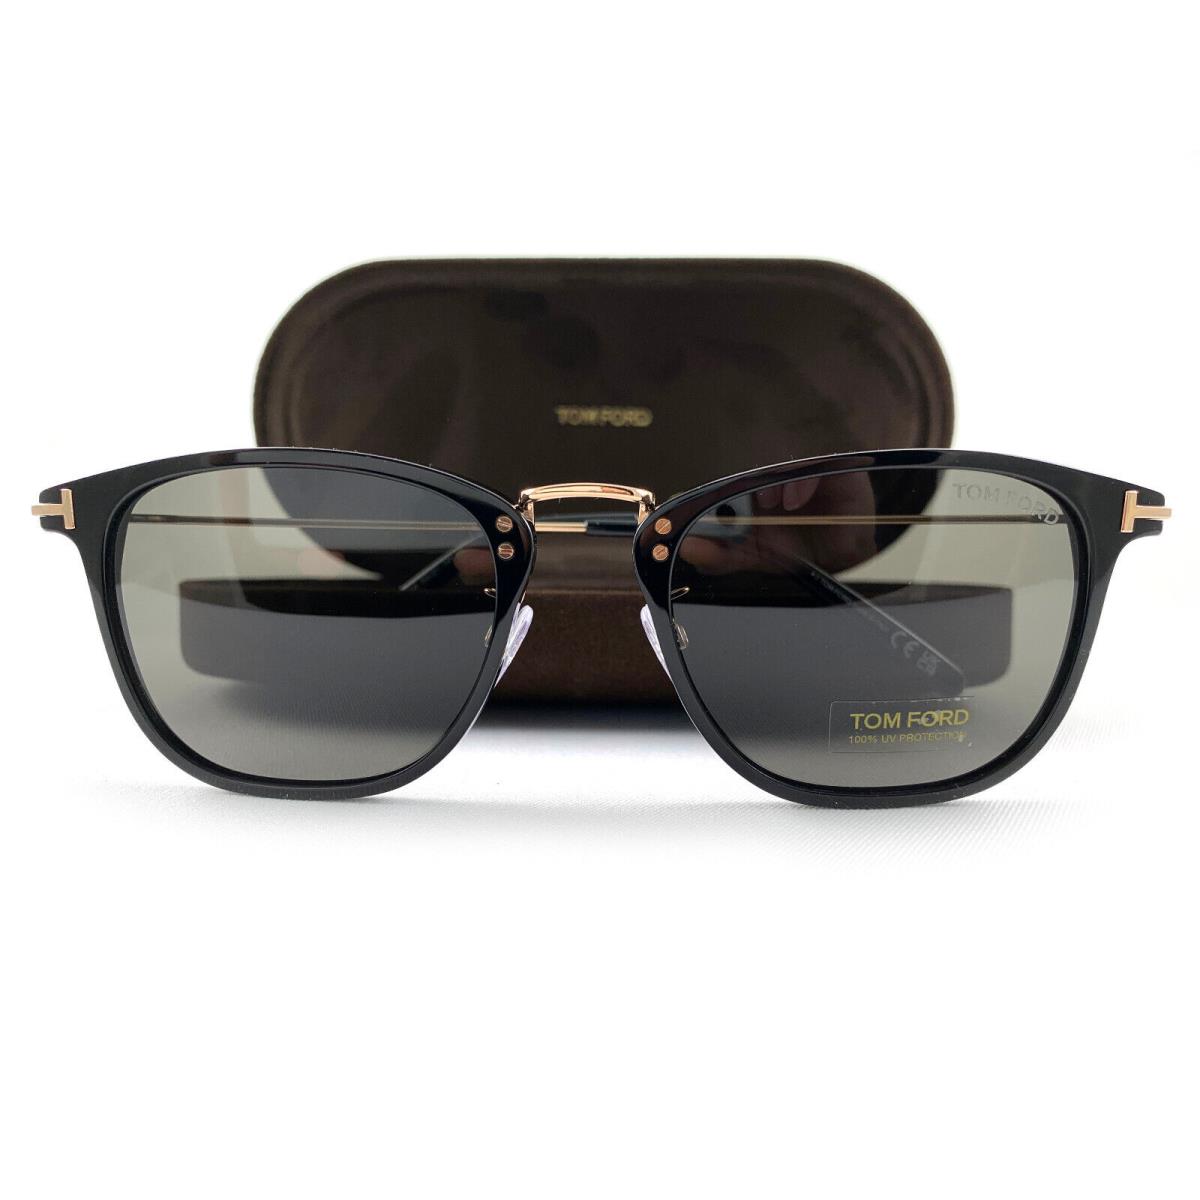 Tom Ford Sunglasses TF672 Beau 01A Black Gold Gray FT0672/S | 004558707329  - Tom Ford sunglasses Beau - Black Frame, Gray Lens | Fash Direct